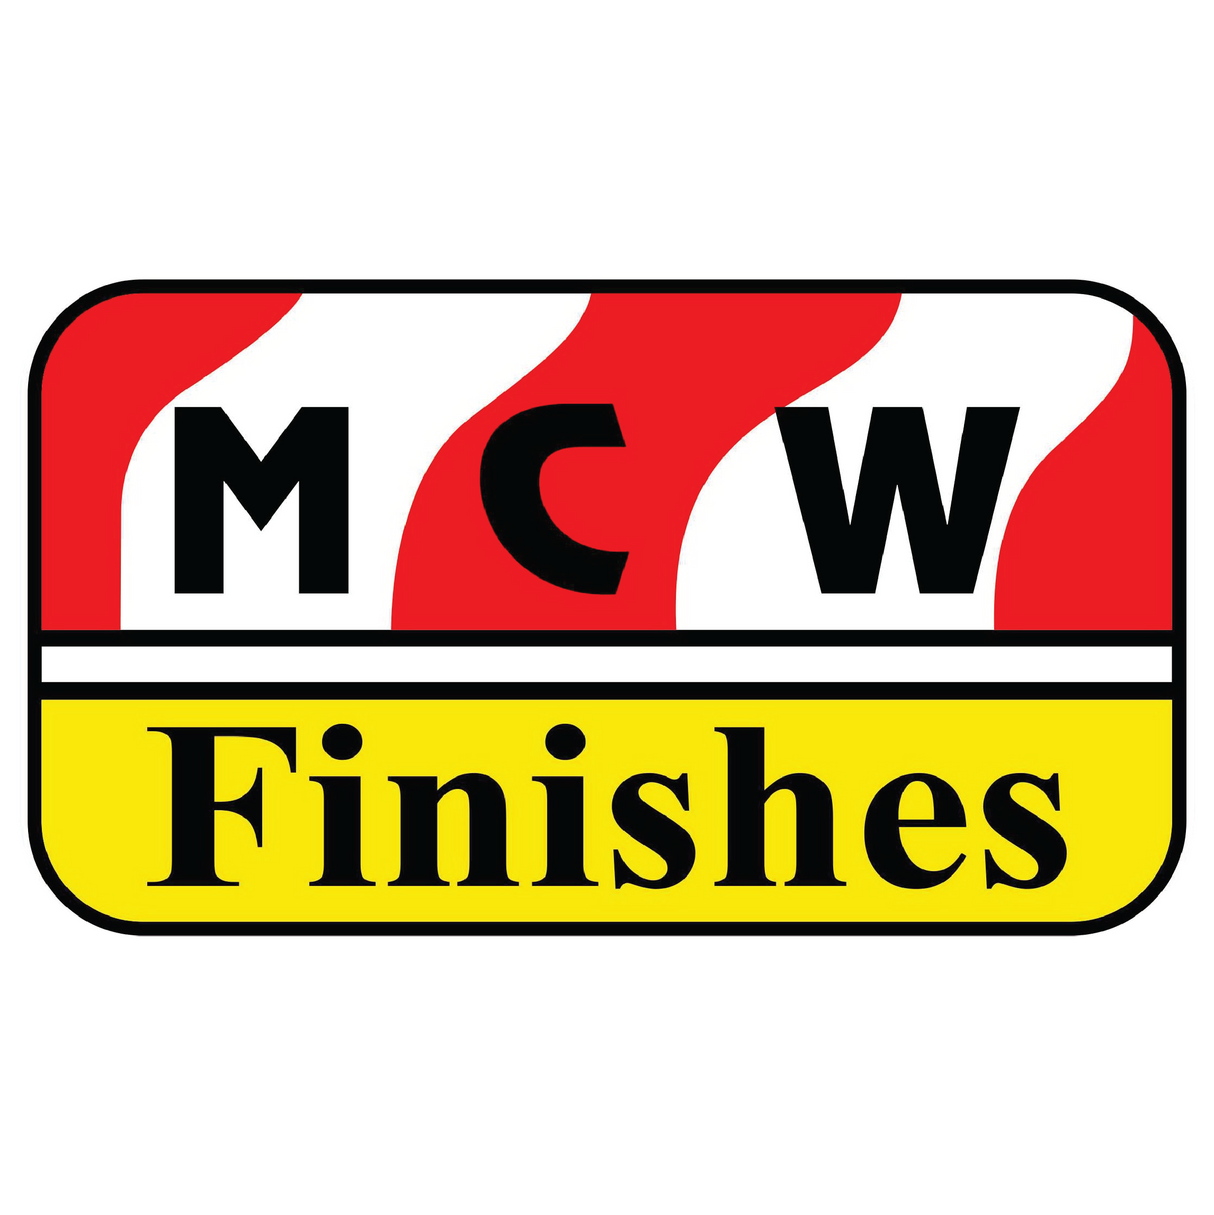 MCW Finishes Flat White